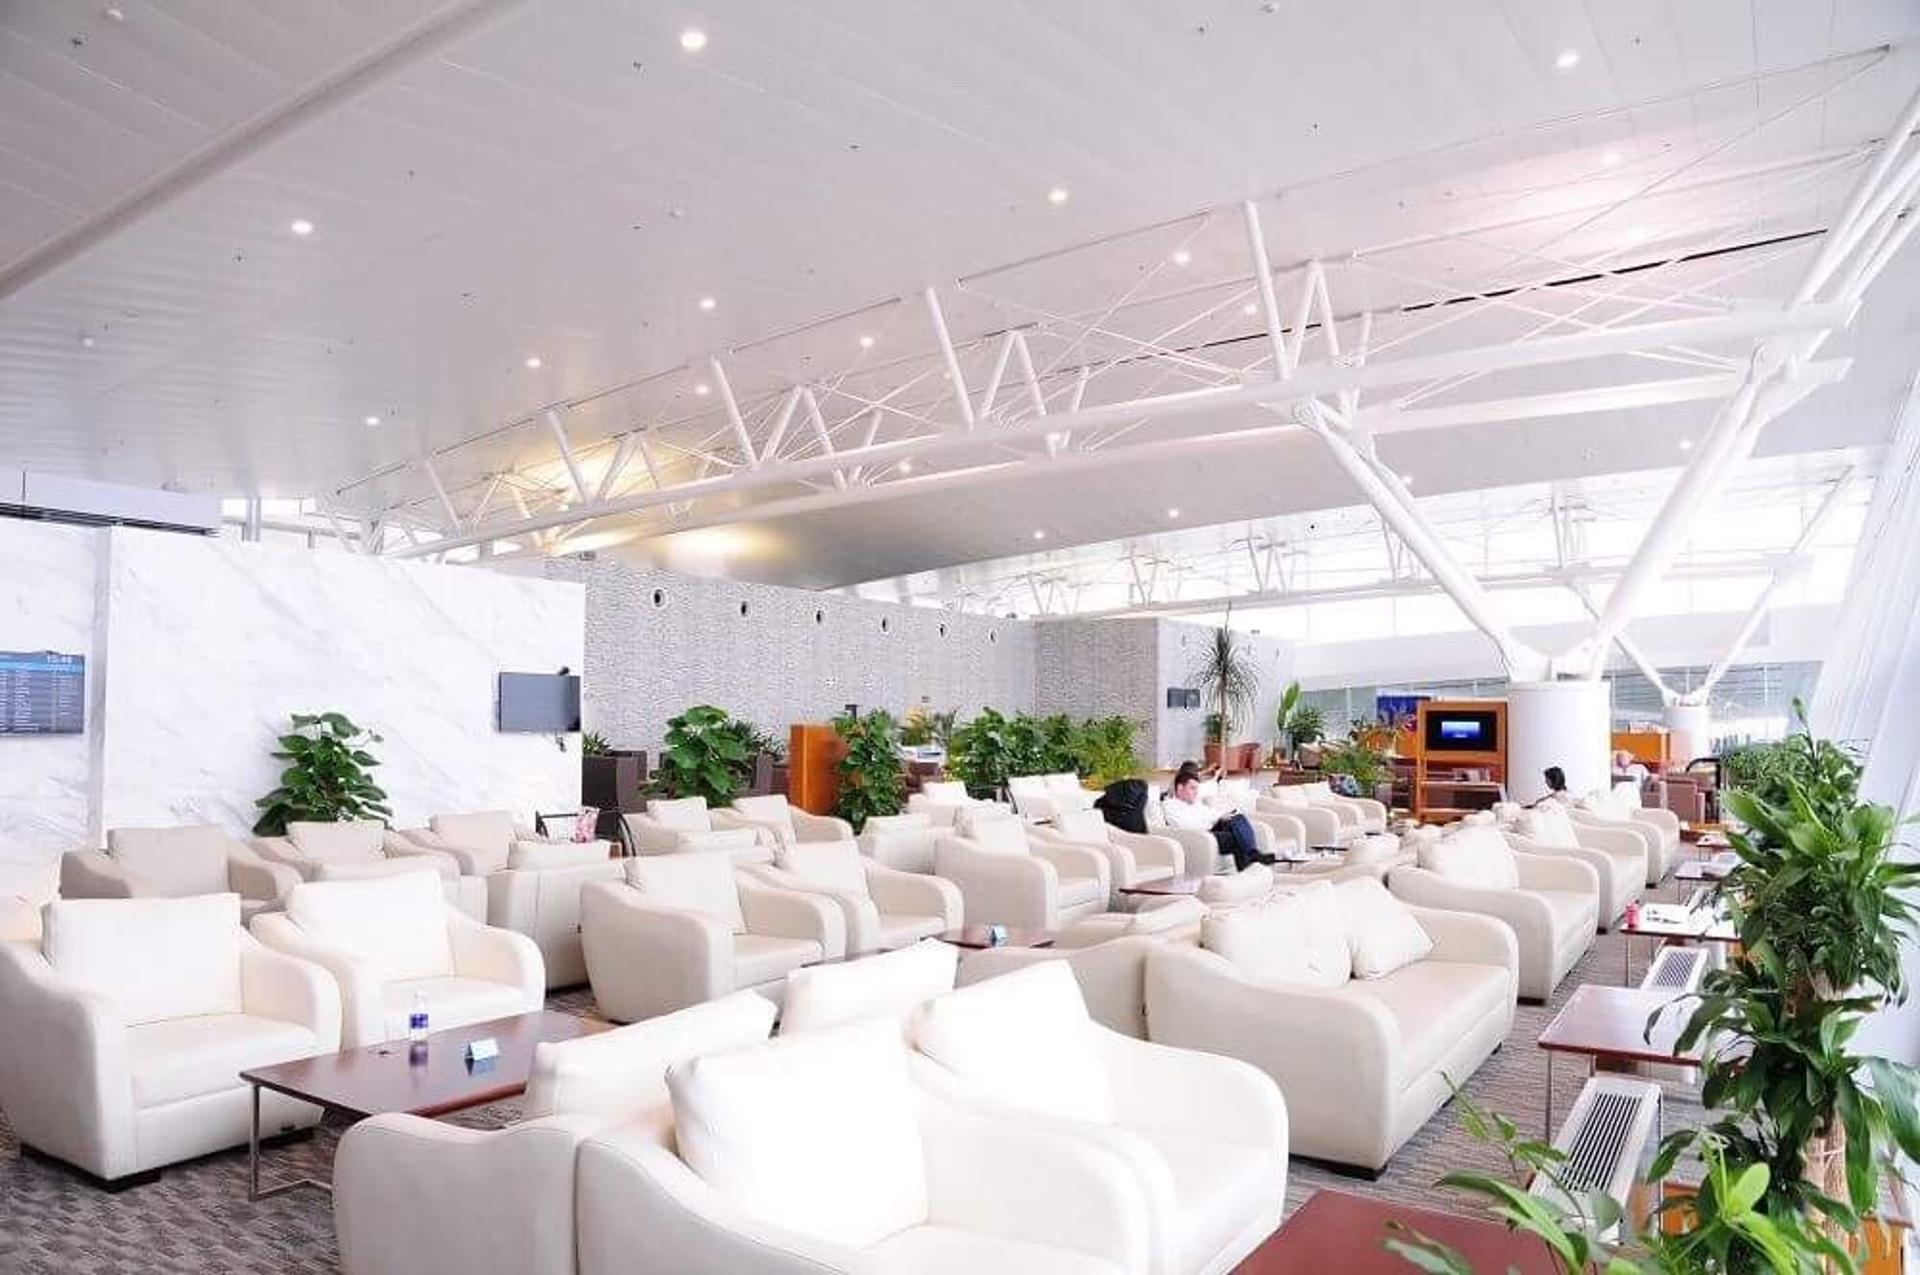 Noi Bai International Airport Business Lounge image 15 of 26